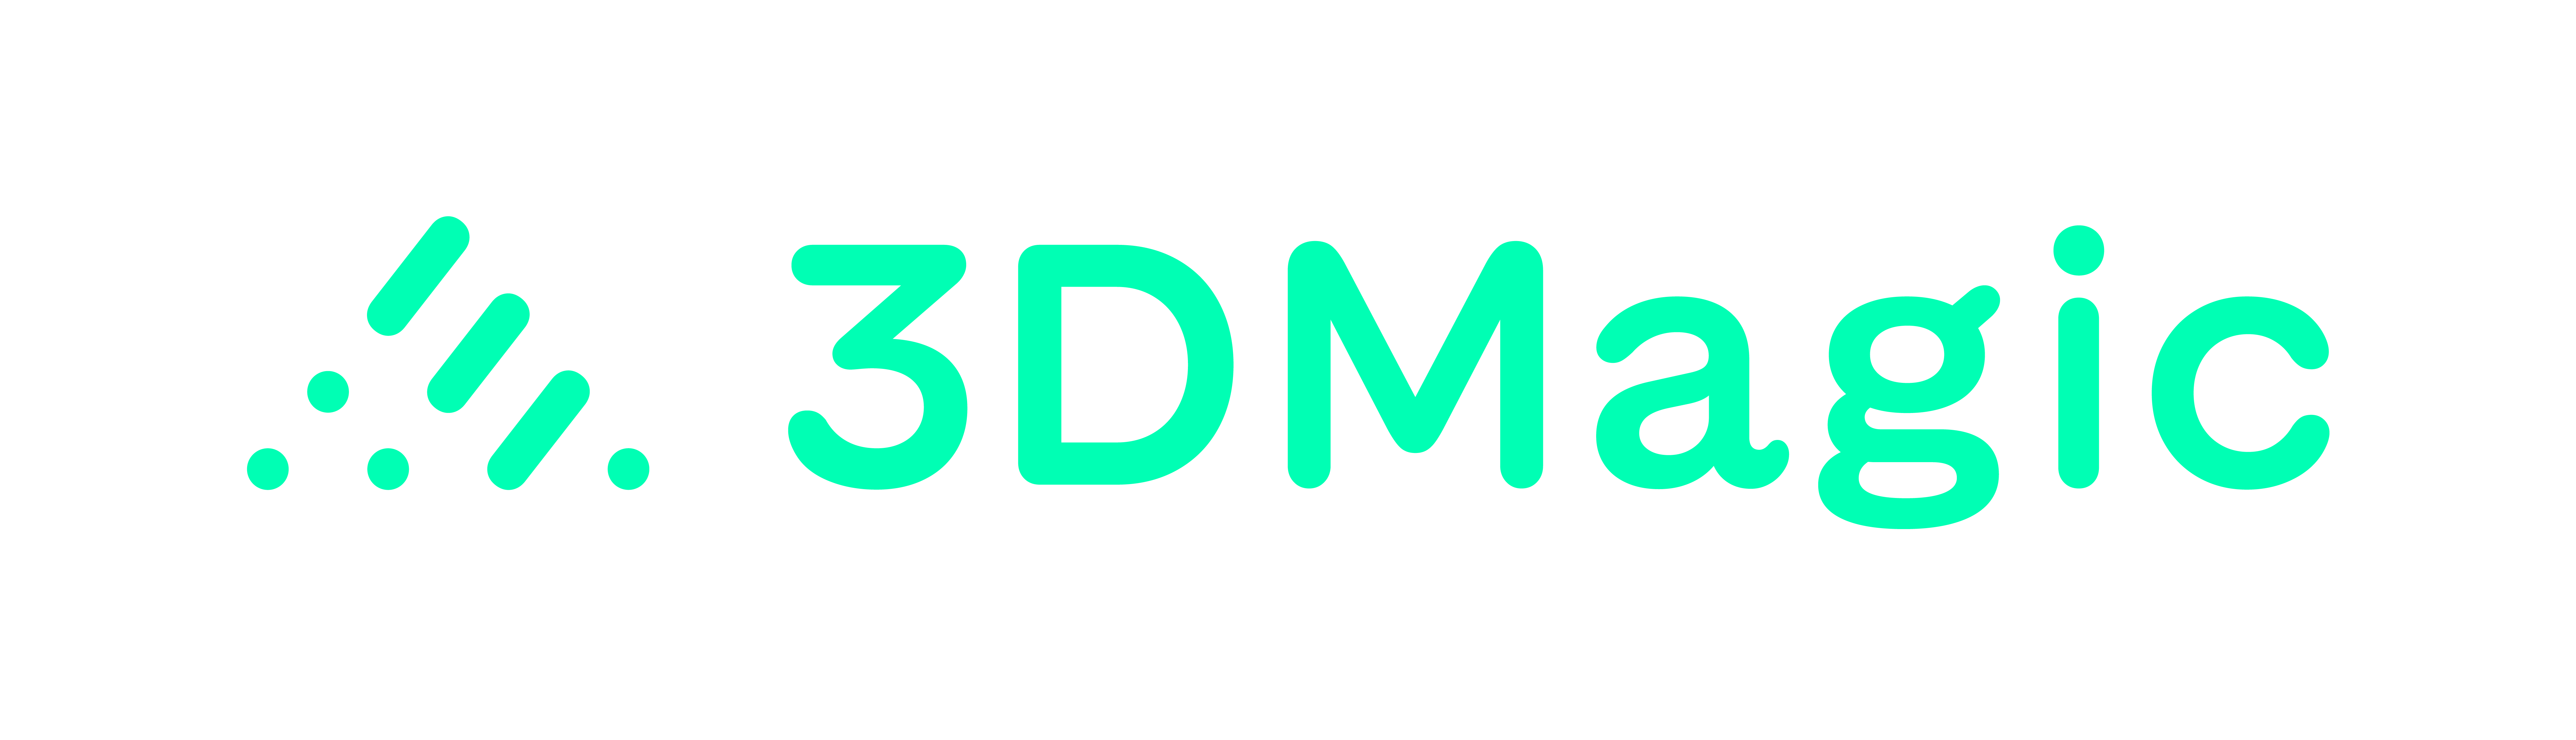 3DMagic_prisma_wordmark_lightgreen-2